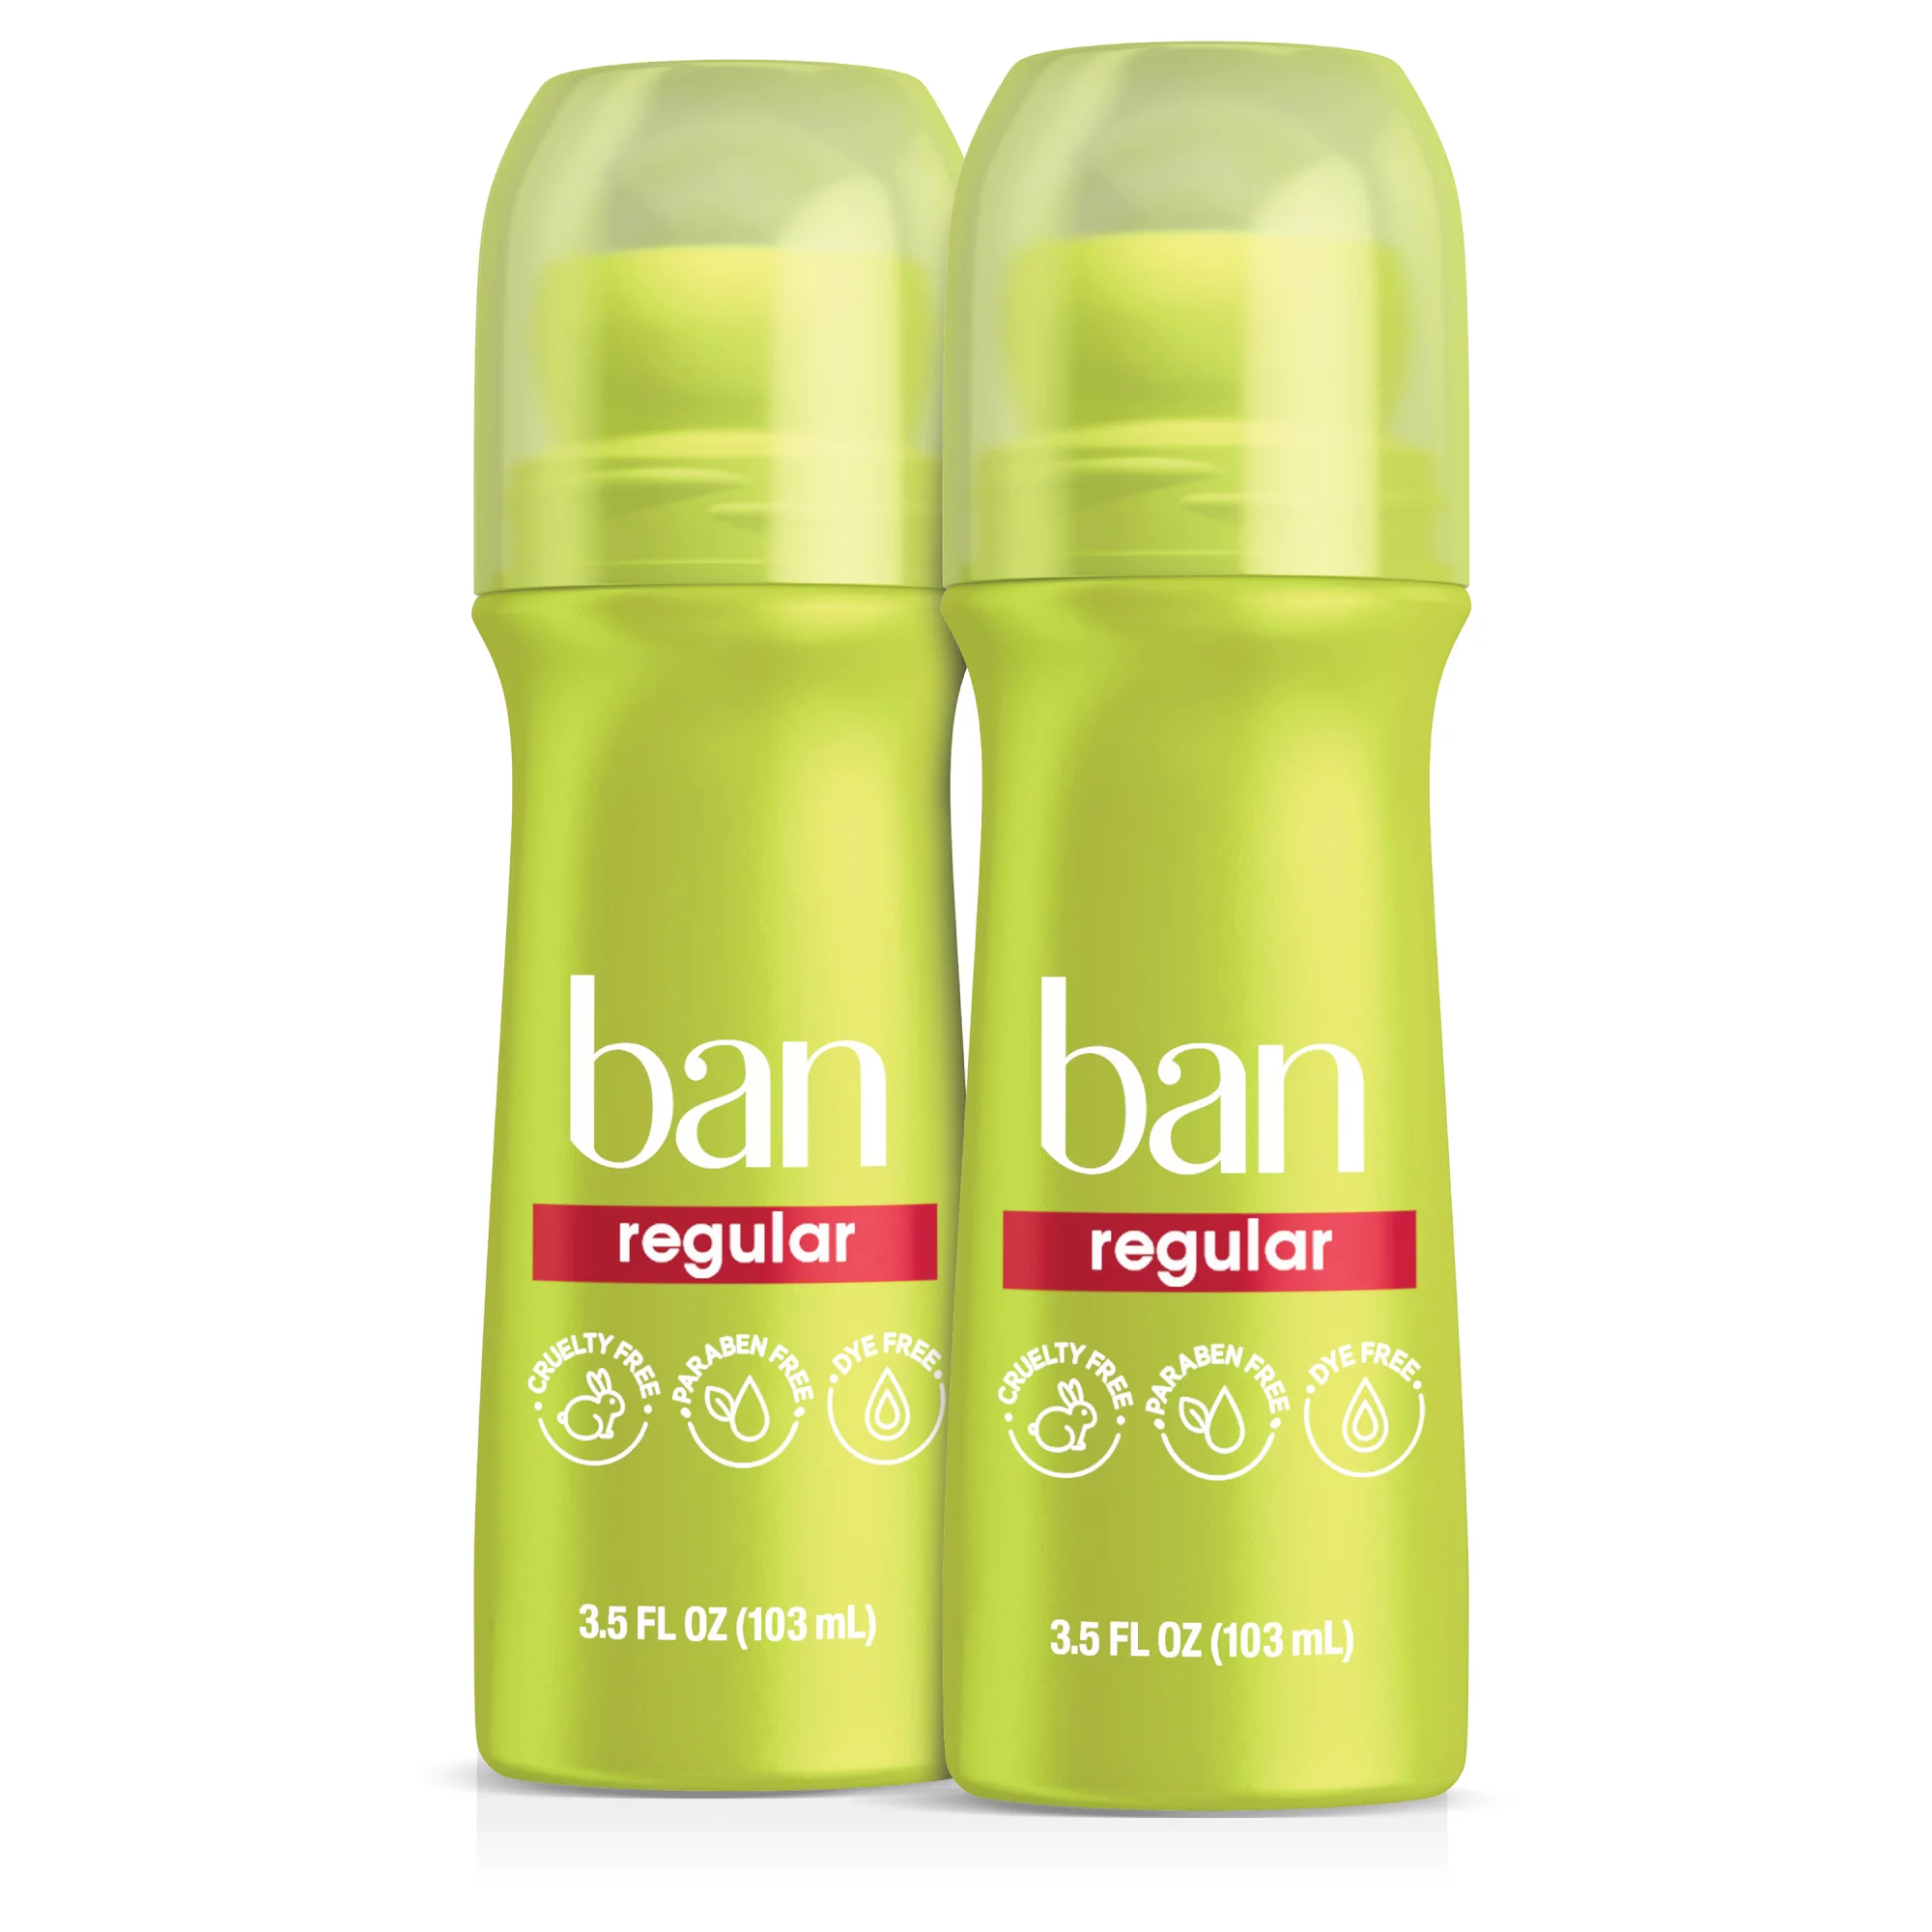 Stay fresh on any Ban Antiperspirant Deodorant.